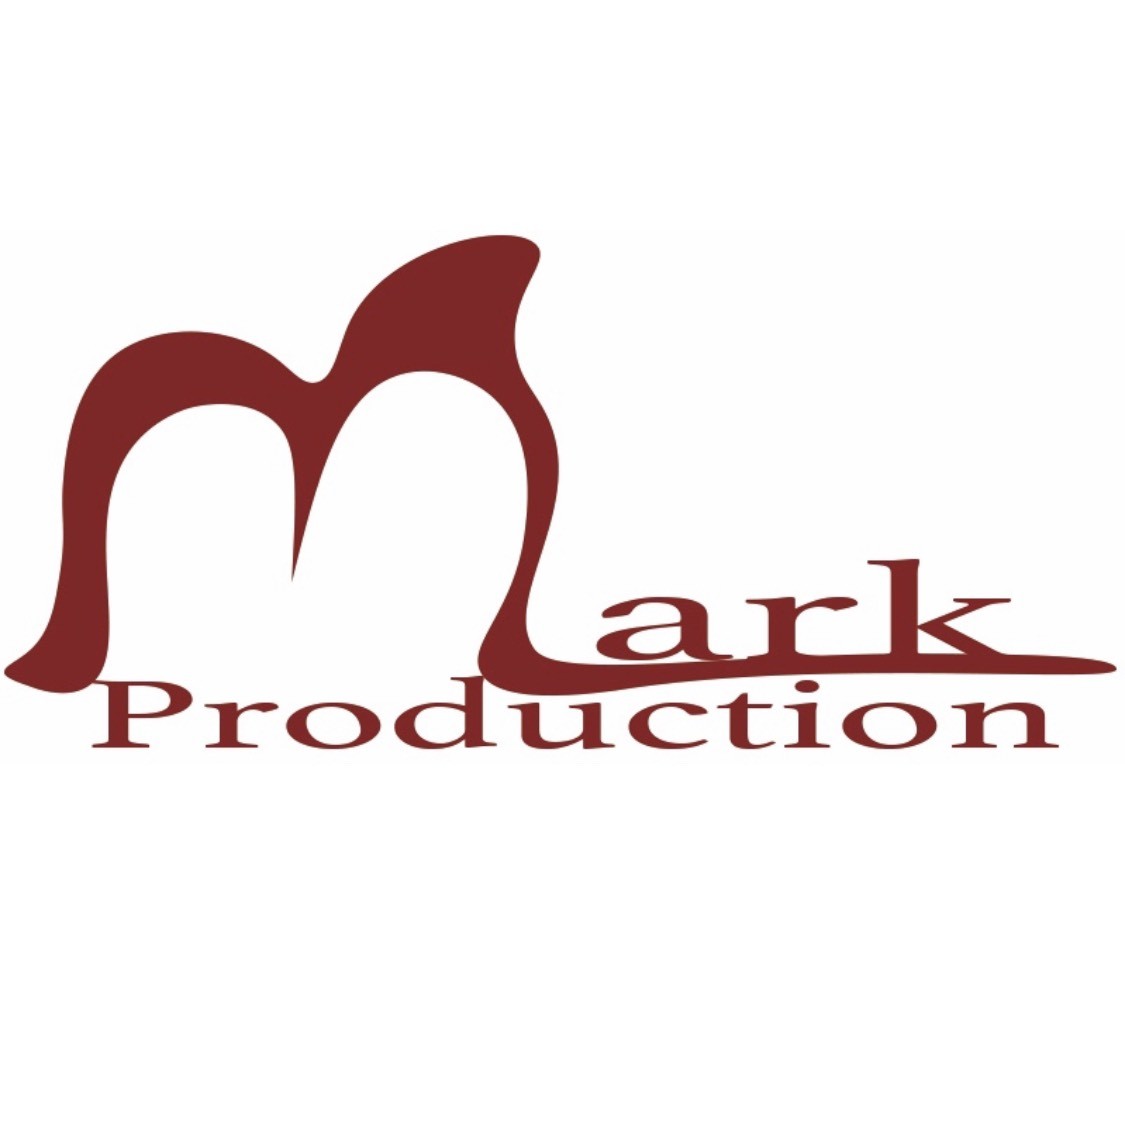 Mark Production オンラインショップ